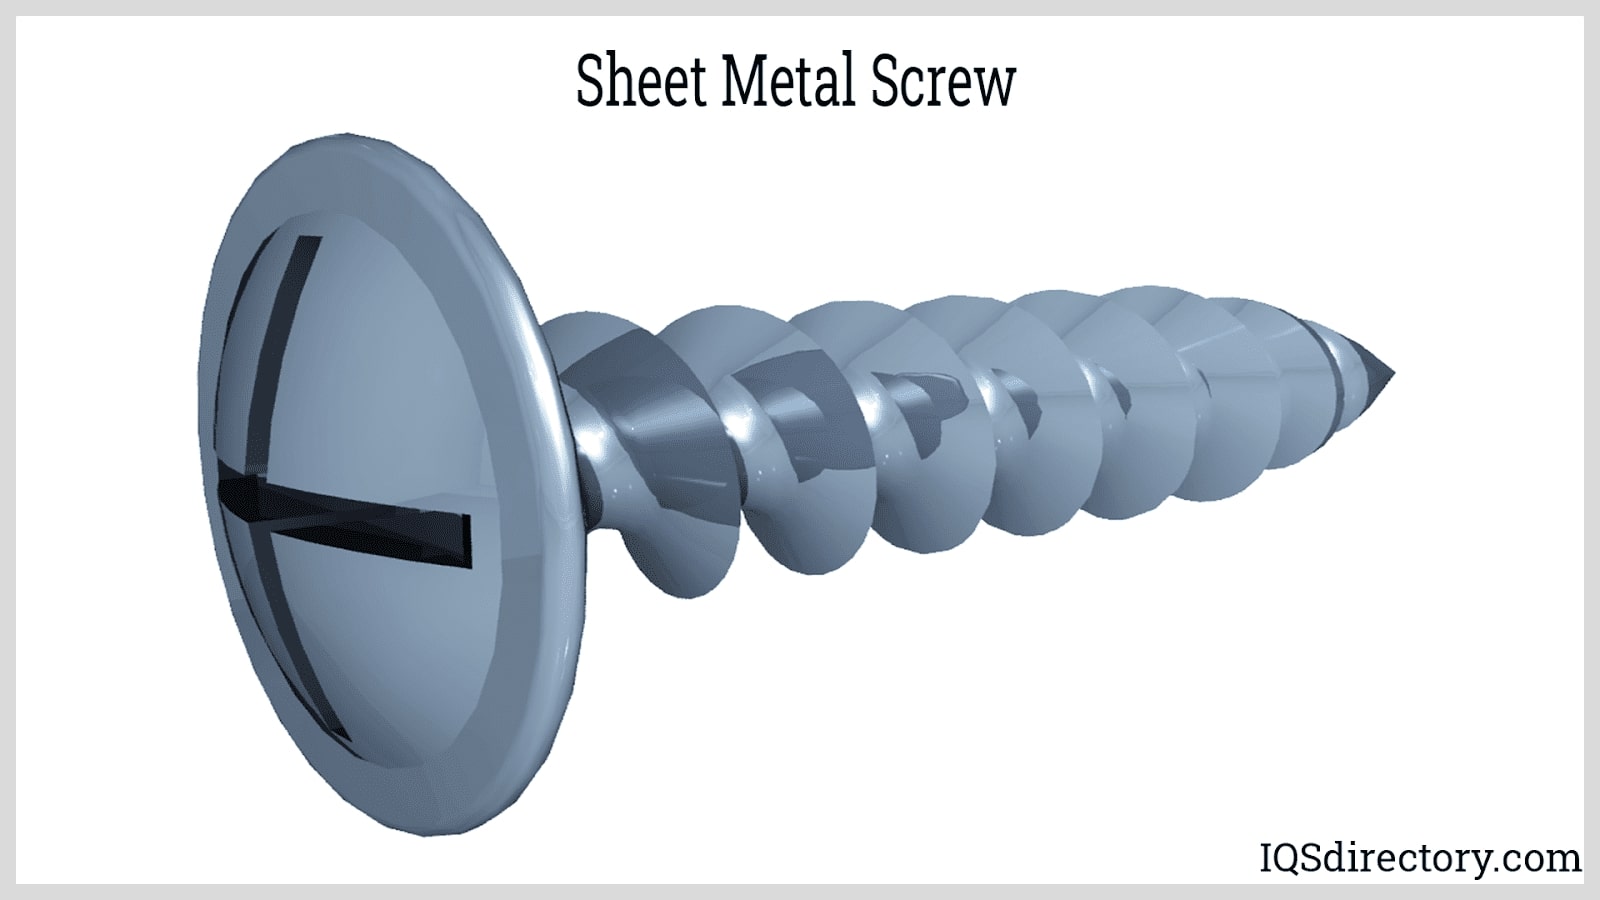 Sheet Metal Screw